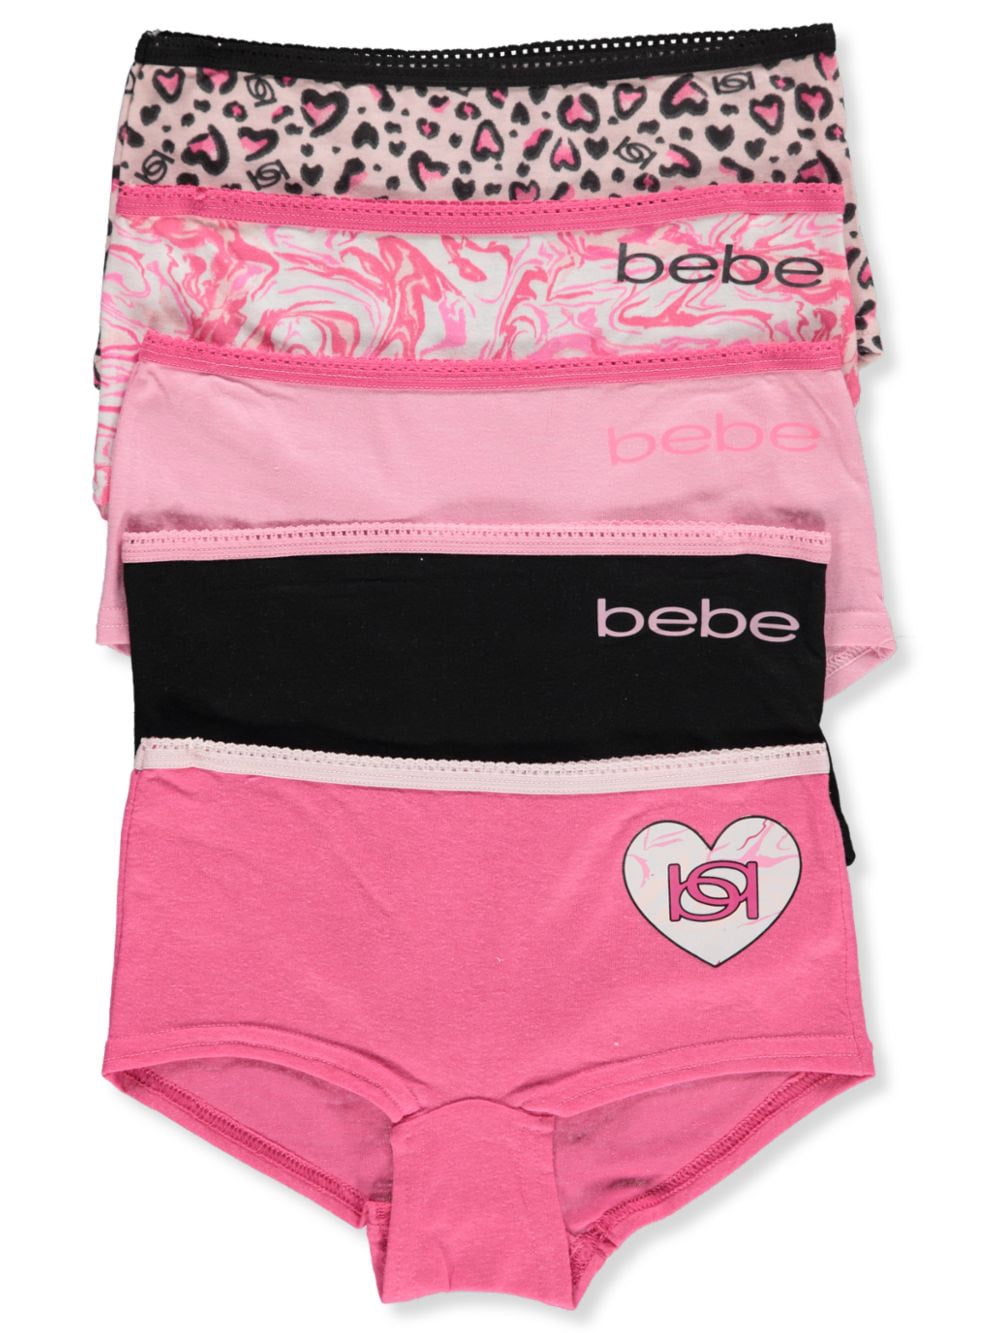 Bebe Girls' 5-Pack Underwear - pink/multi, 12 - 14 (Big Girls)